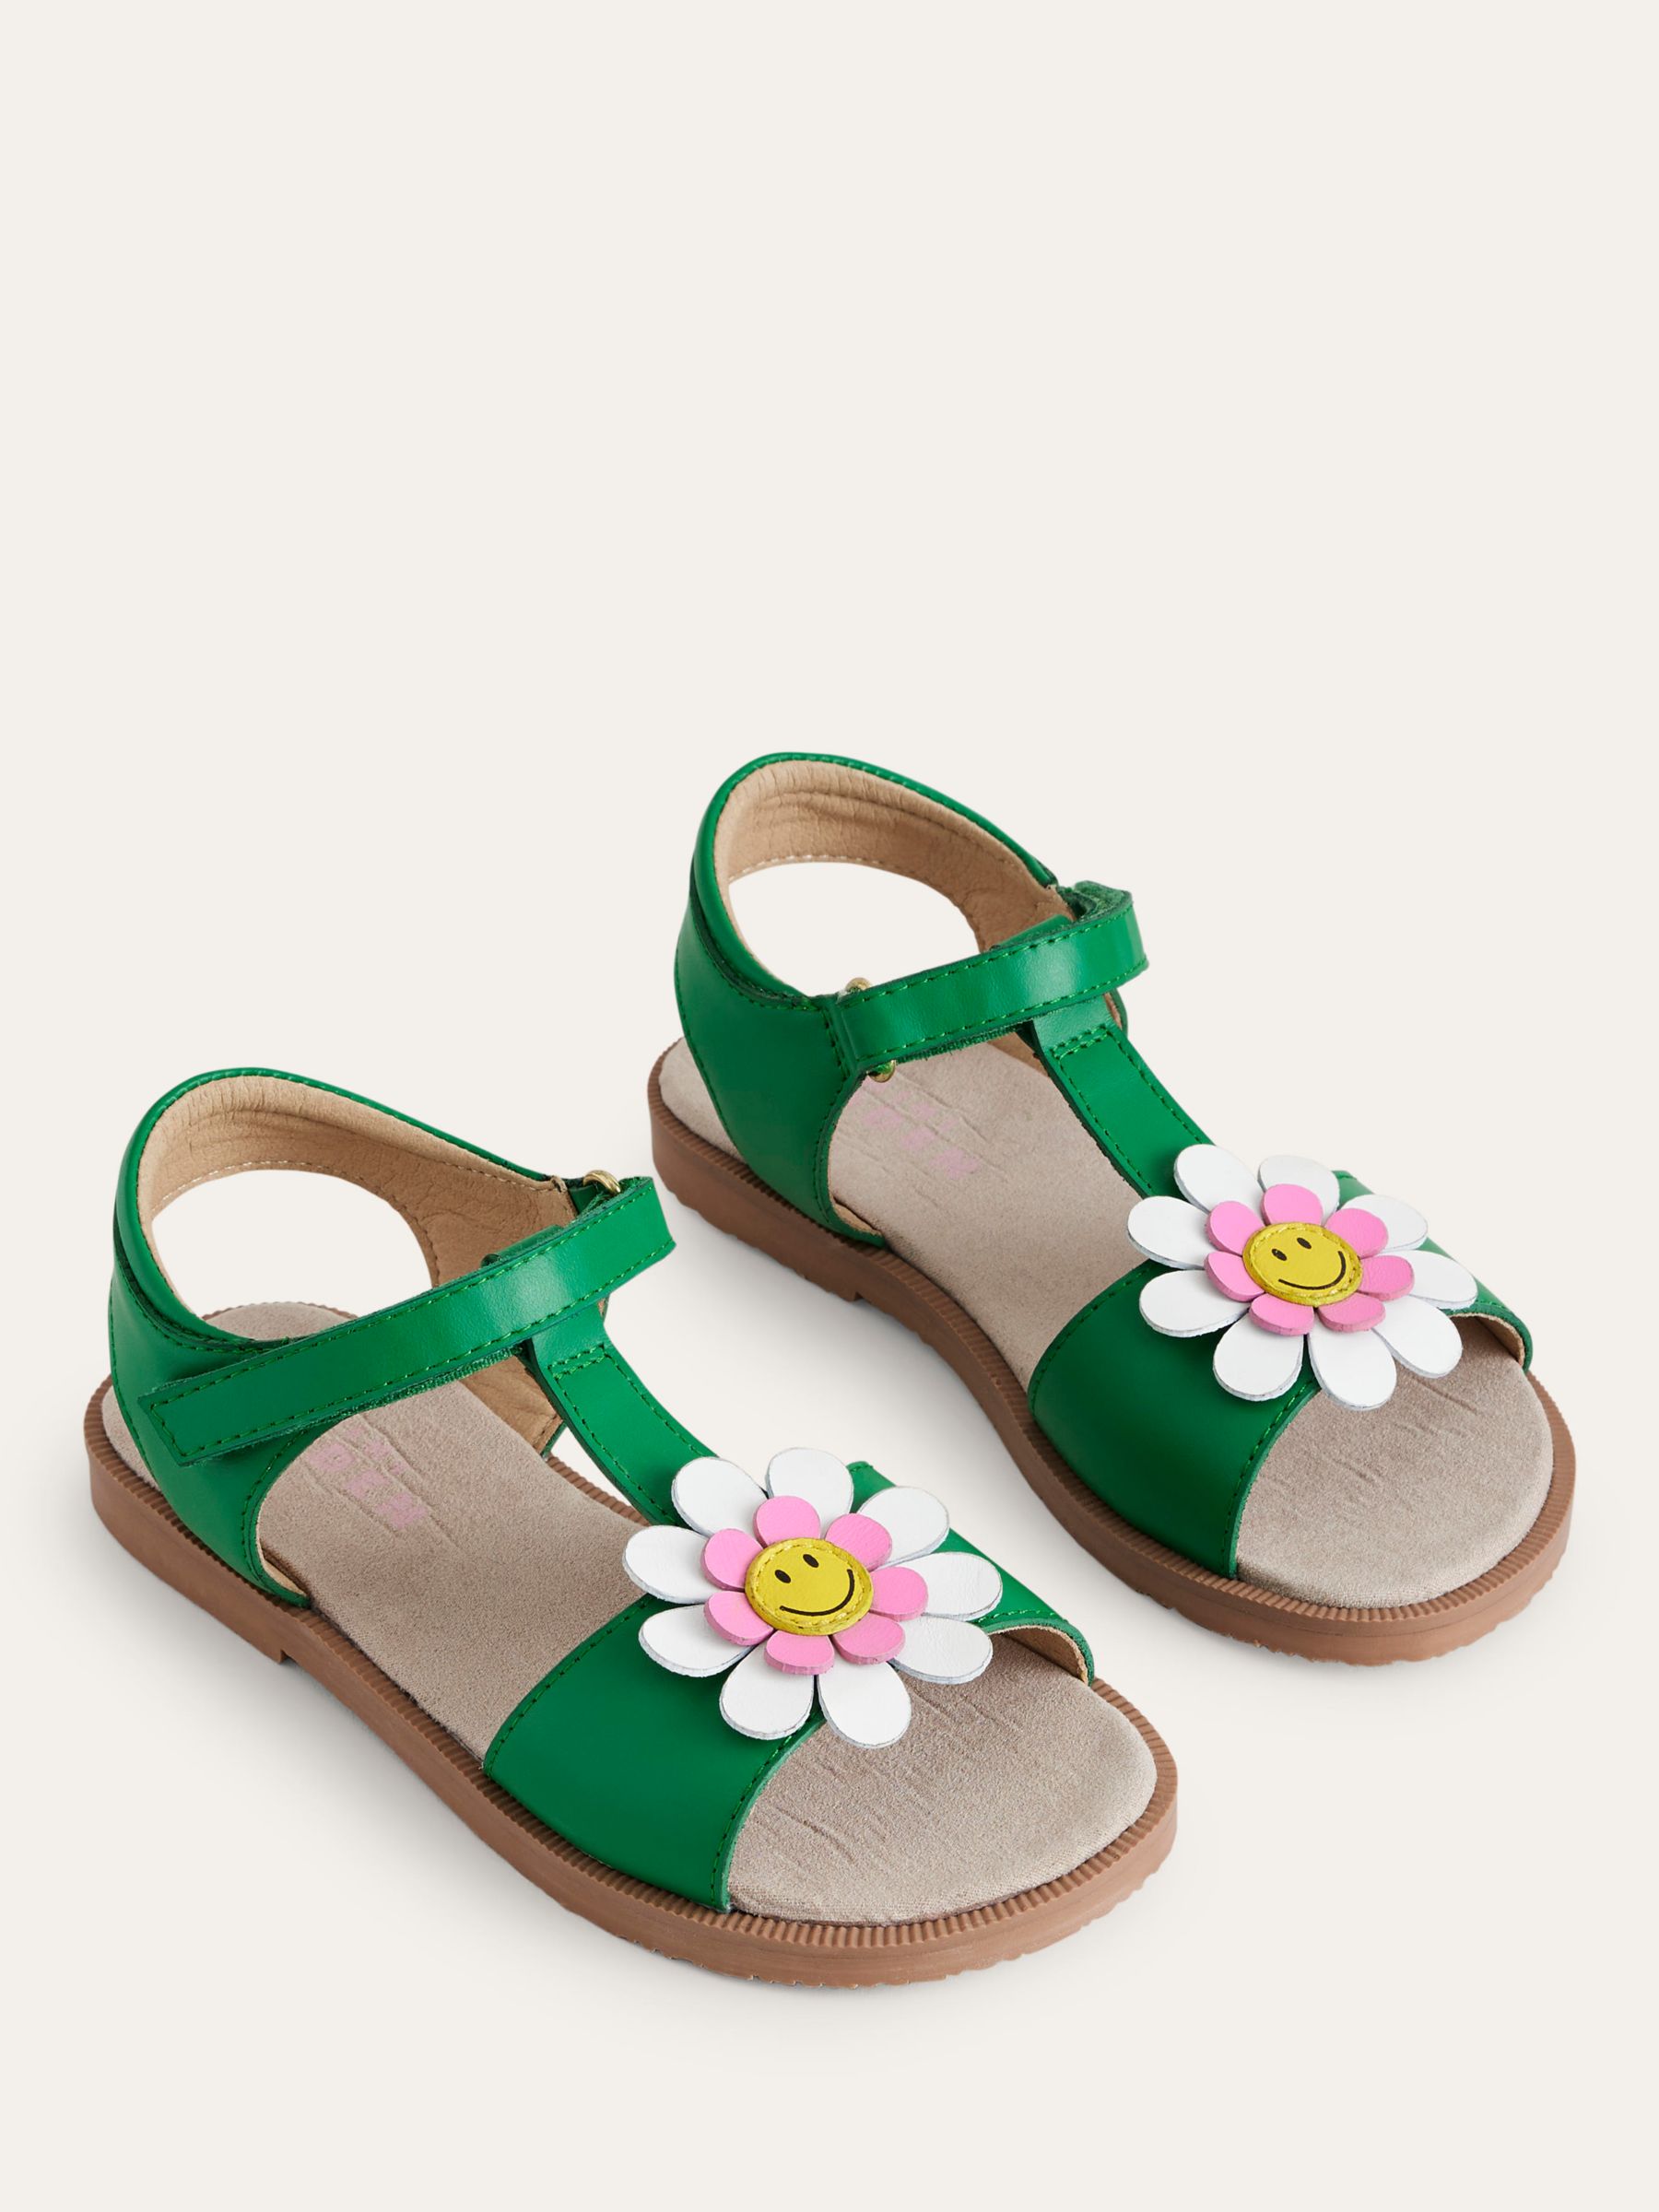 Mini Boden Kids' Leather Fun Flower Sandals, Green Smiley, 7 Jnr